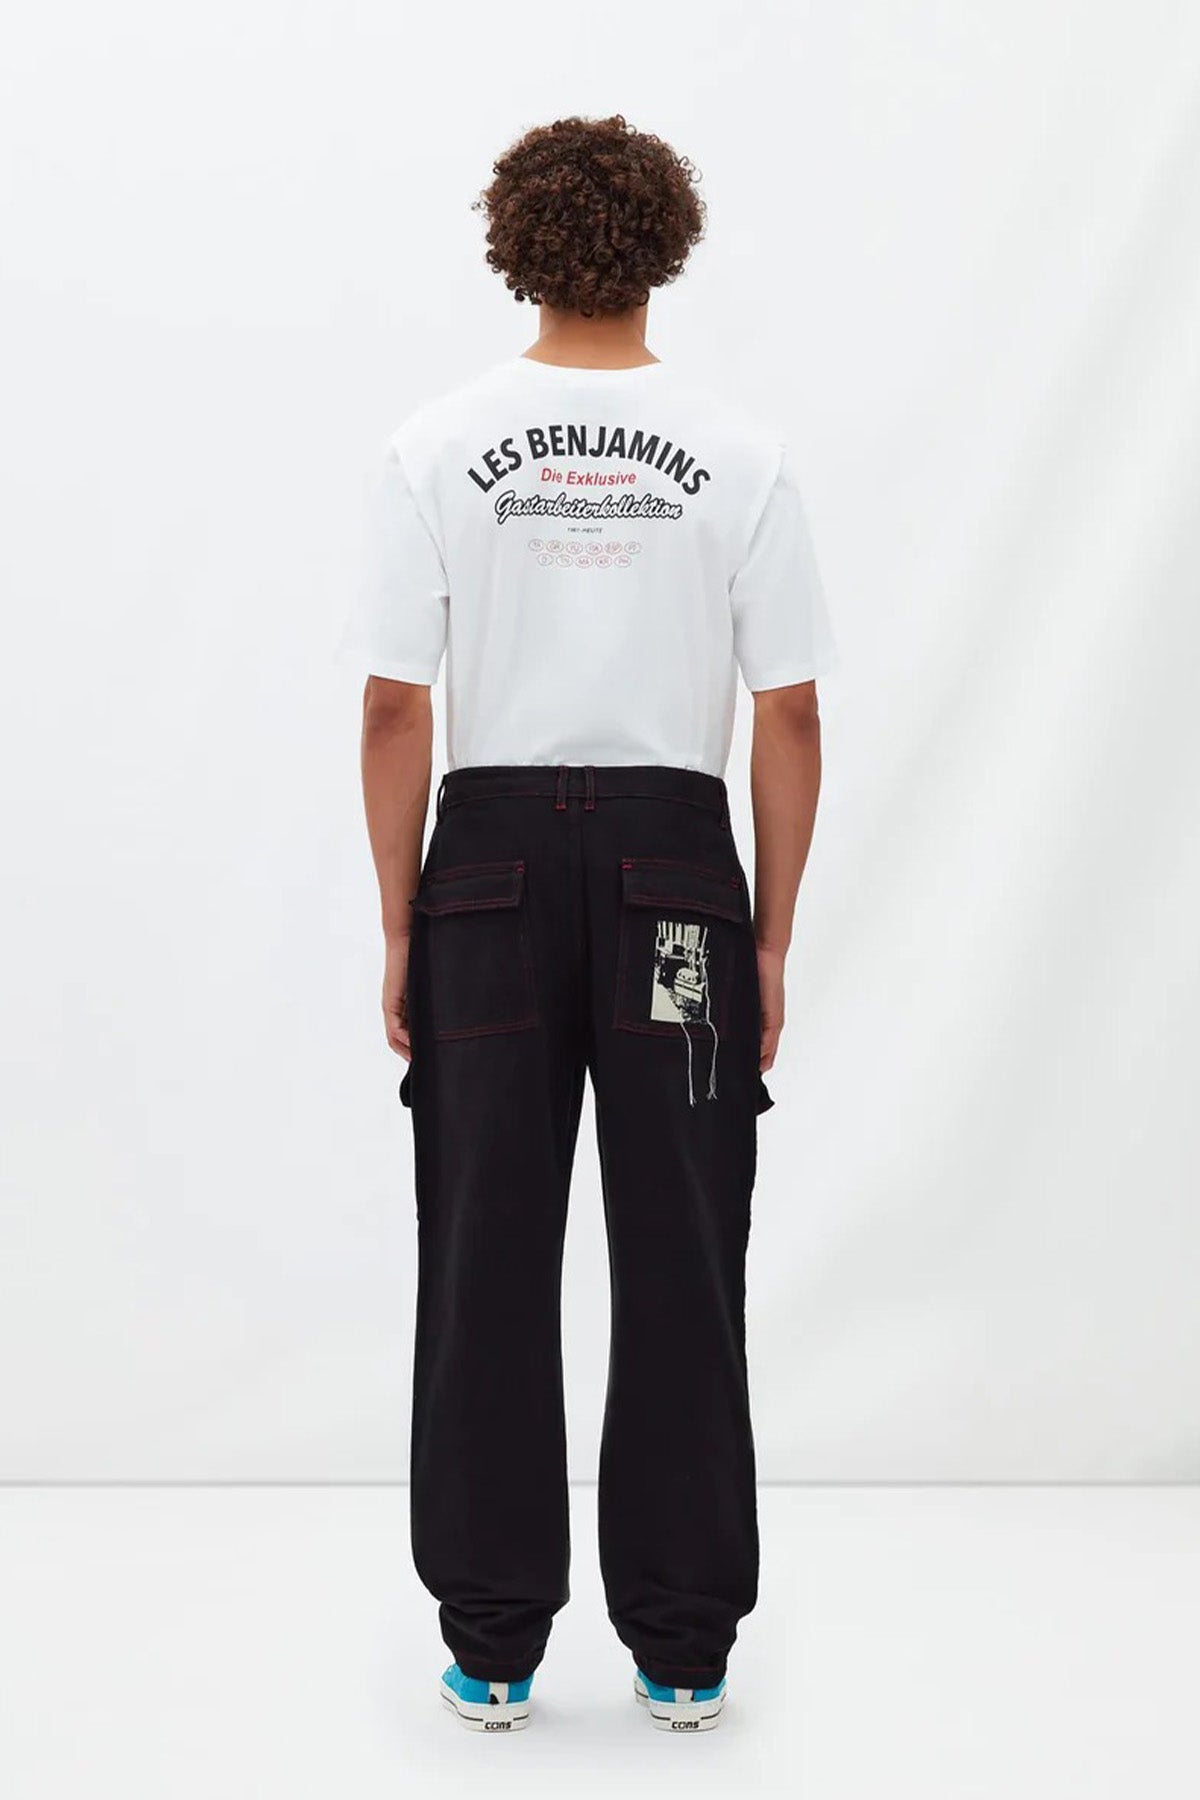 Les Benjamins Logolu Kargo Pantolon-Libas Trendy Fashion Store